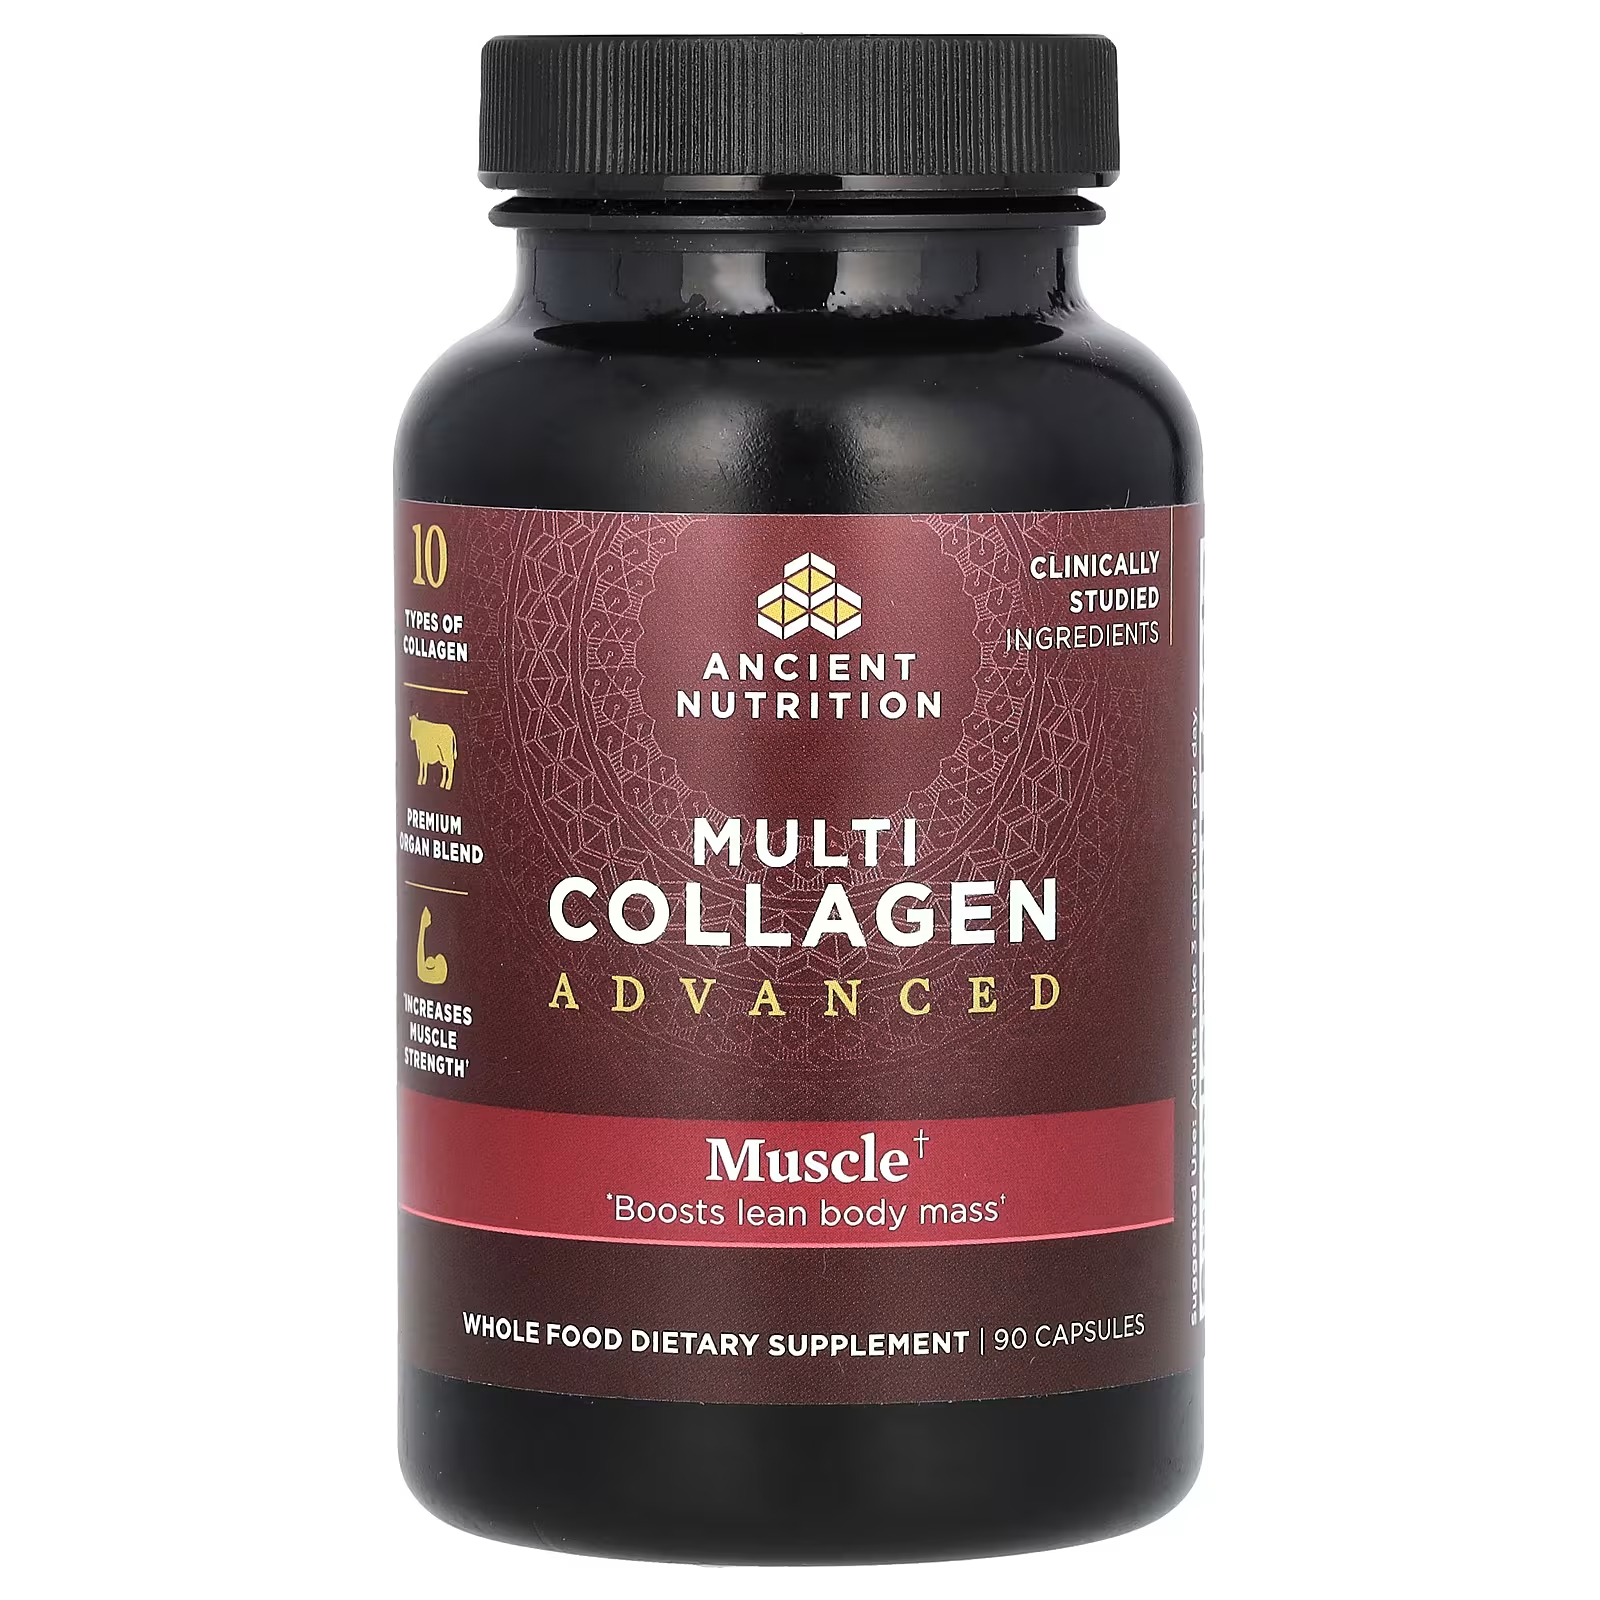 Пищевая добавка Ancient Nutrition Multi Collagen Advanced Muscle, 90 капсул пищевая добавка nature s craft multi collagen complex 120 капсул